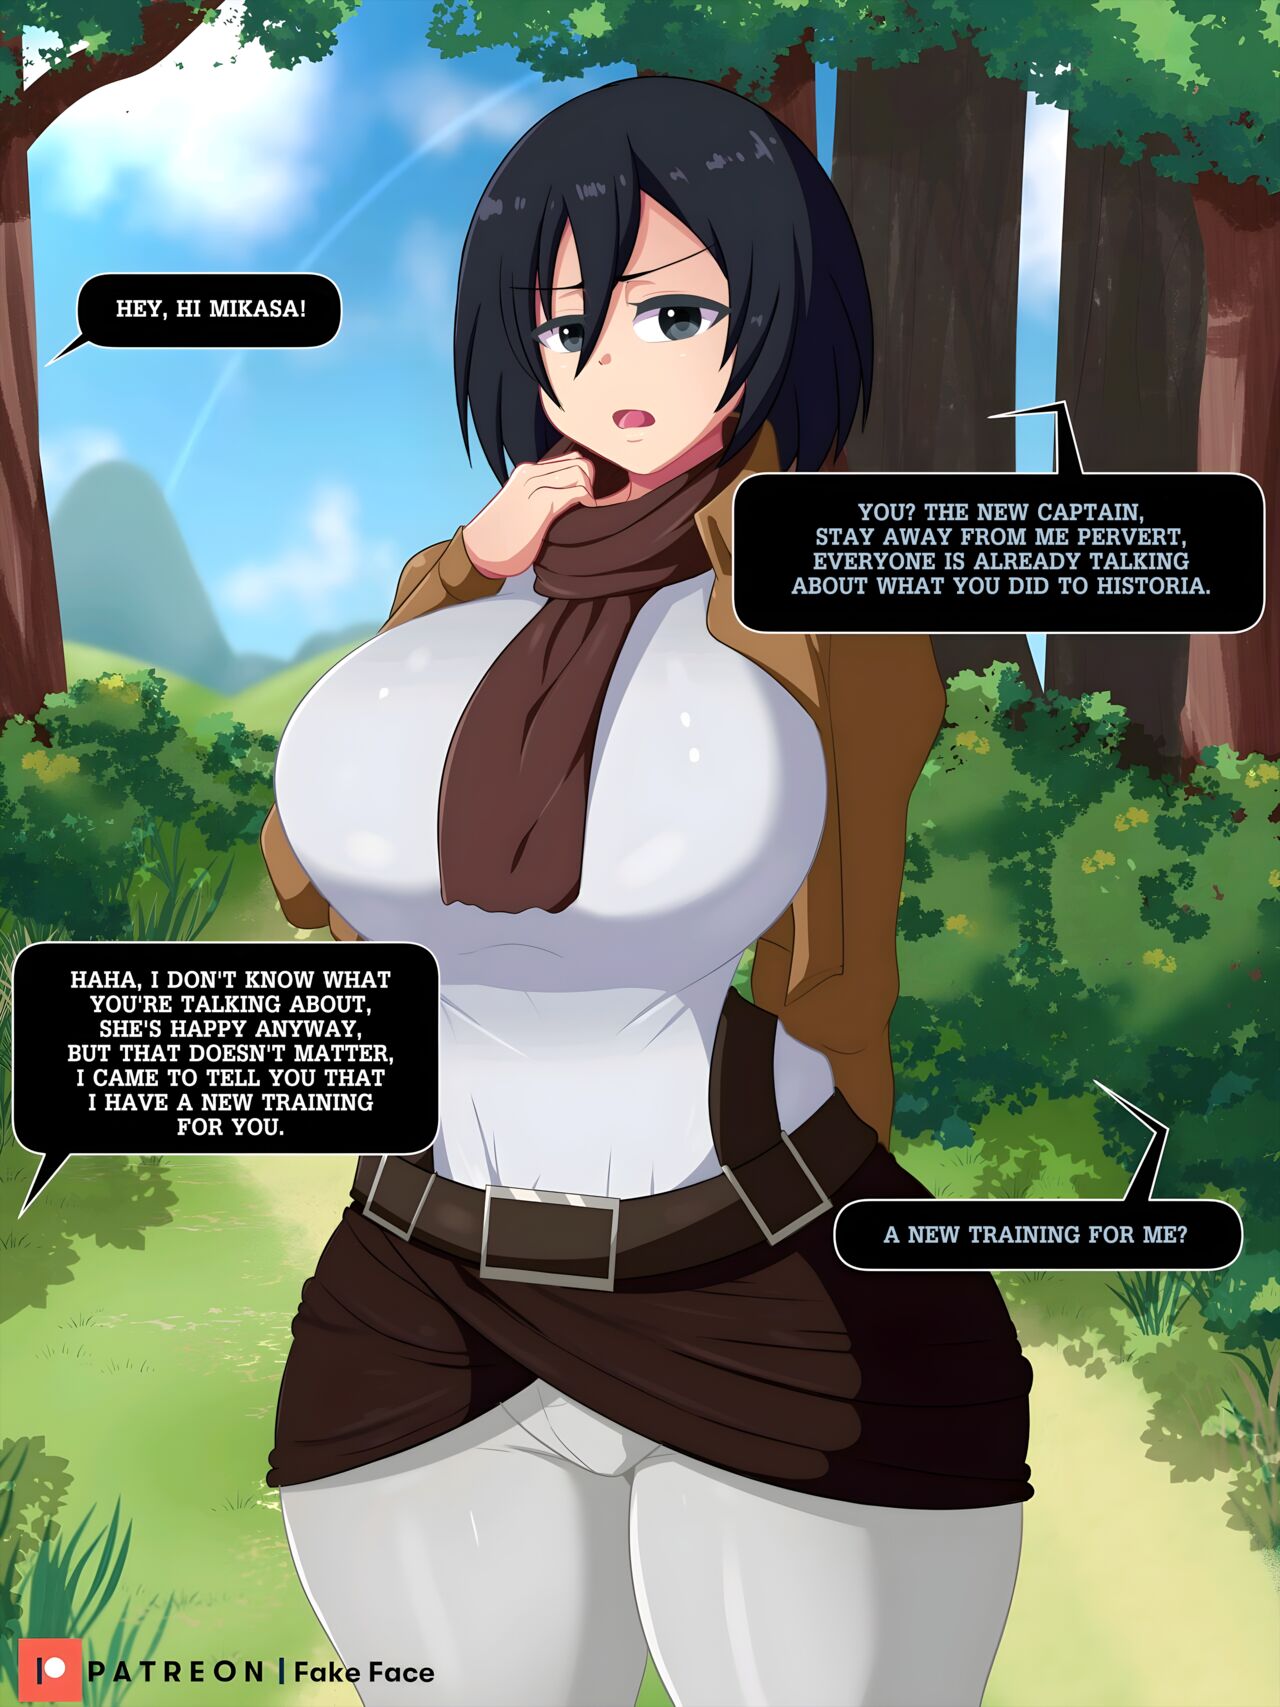 Mikasa ackerman comics porno